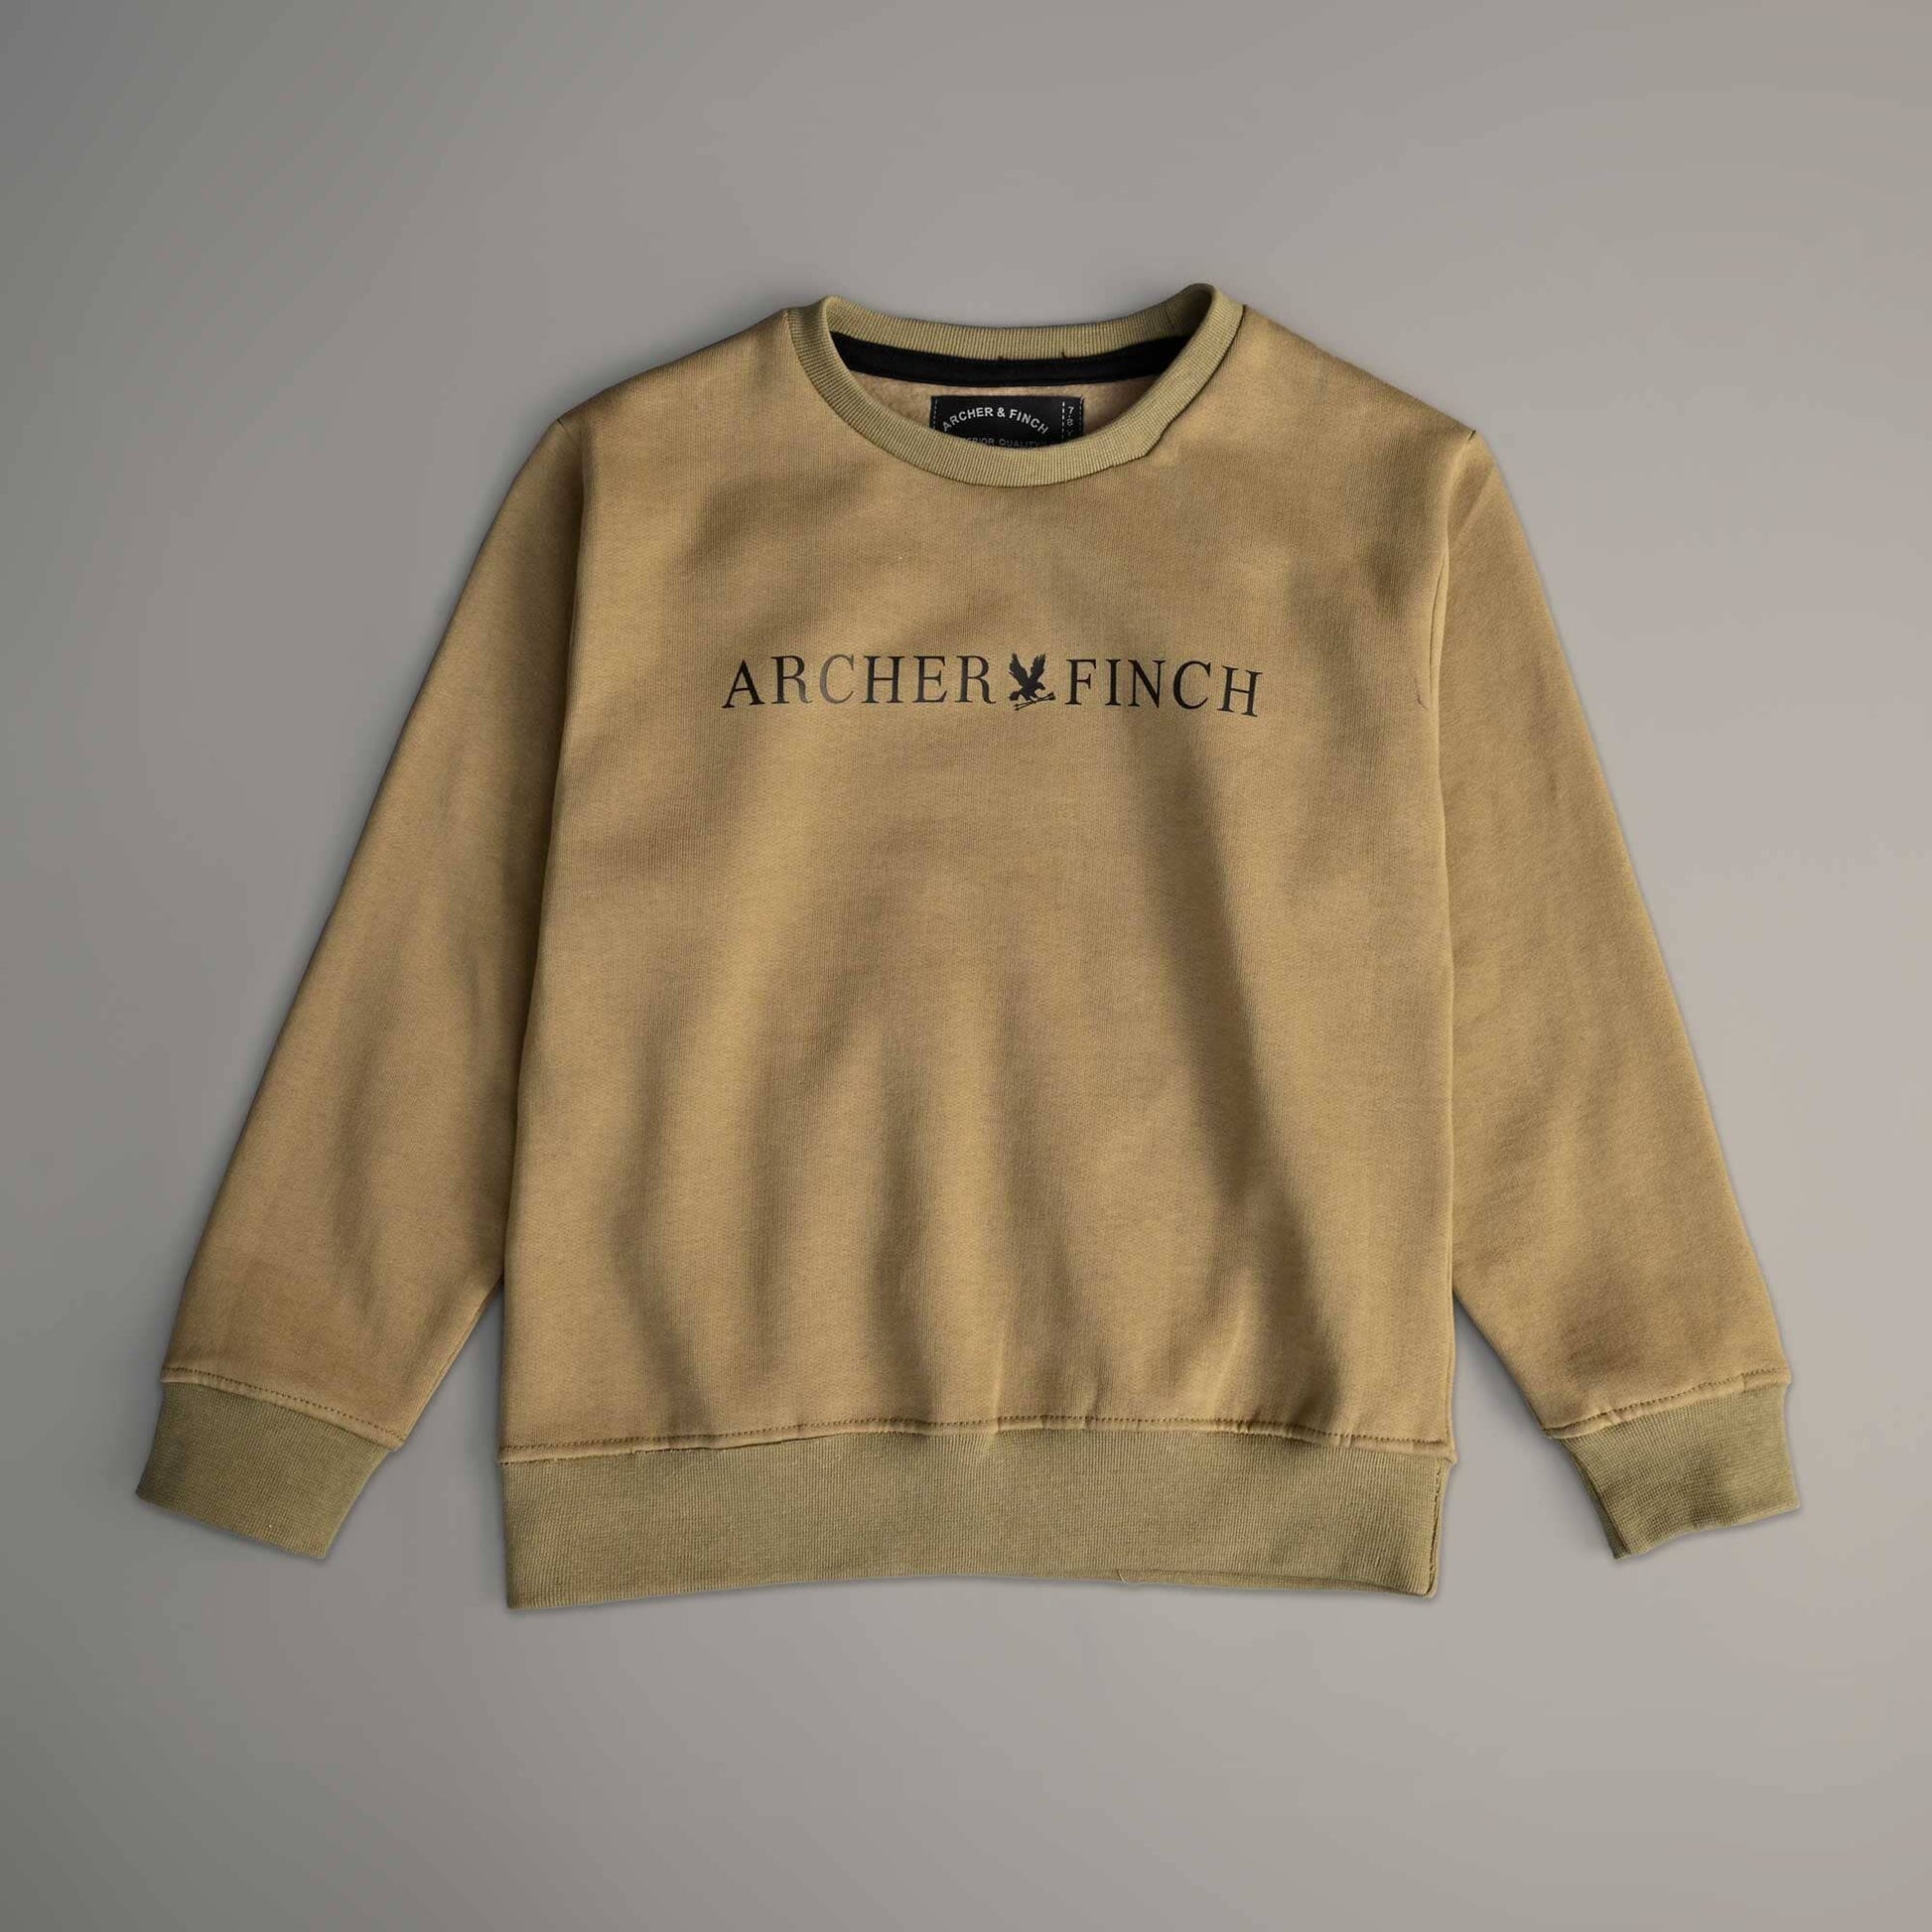 A&F Boy's Archer & Finch Printed Fleece Sweat Shirt Boy's Sweat Shirt LFS Dark Olive 3-4 Years 